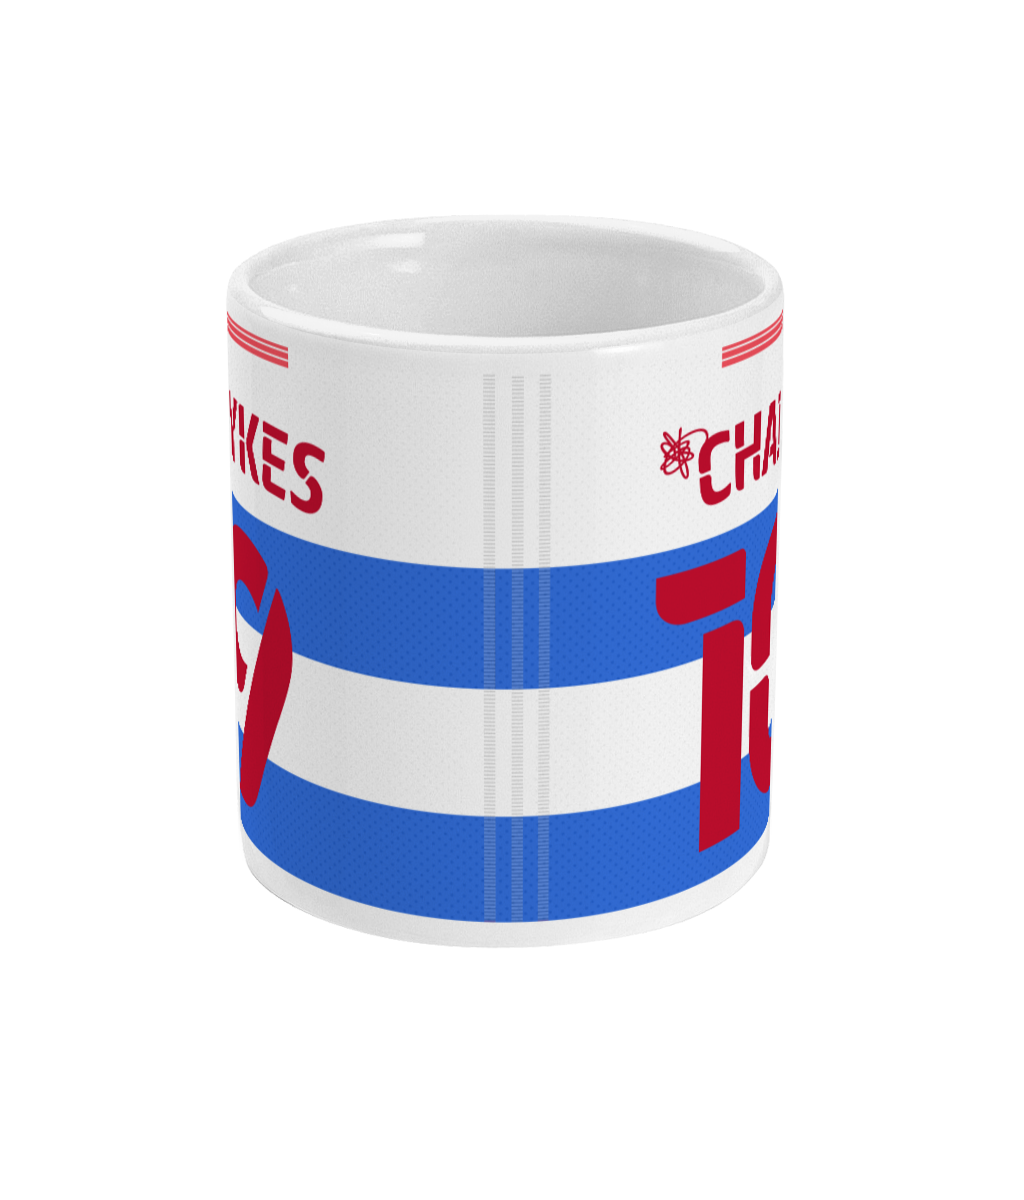 QPR - Personalised Home Mug